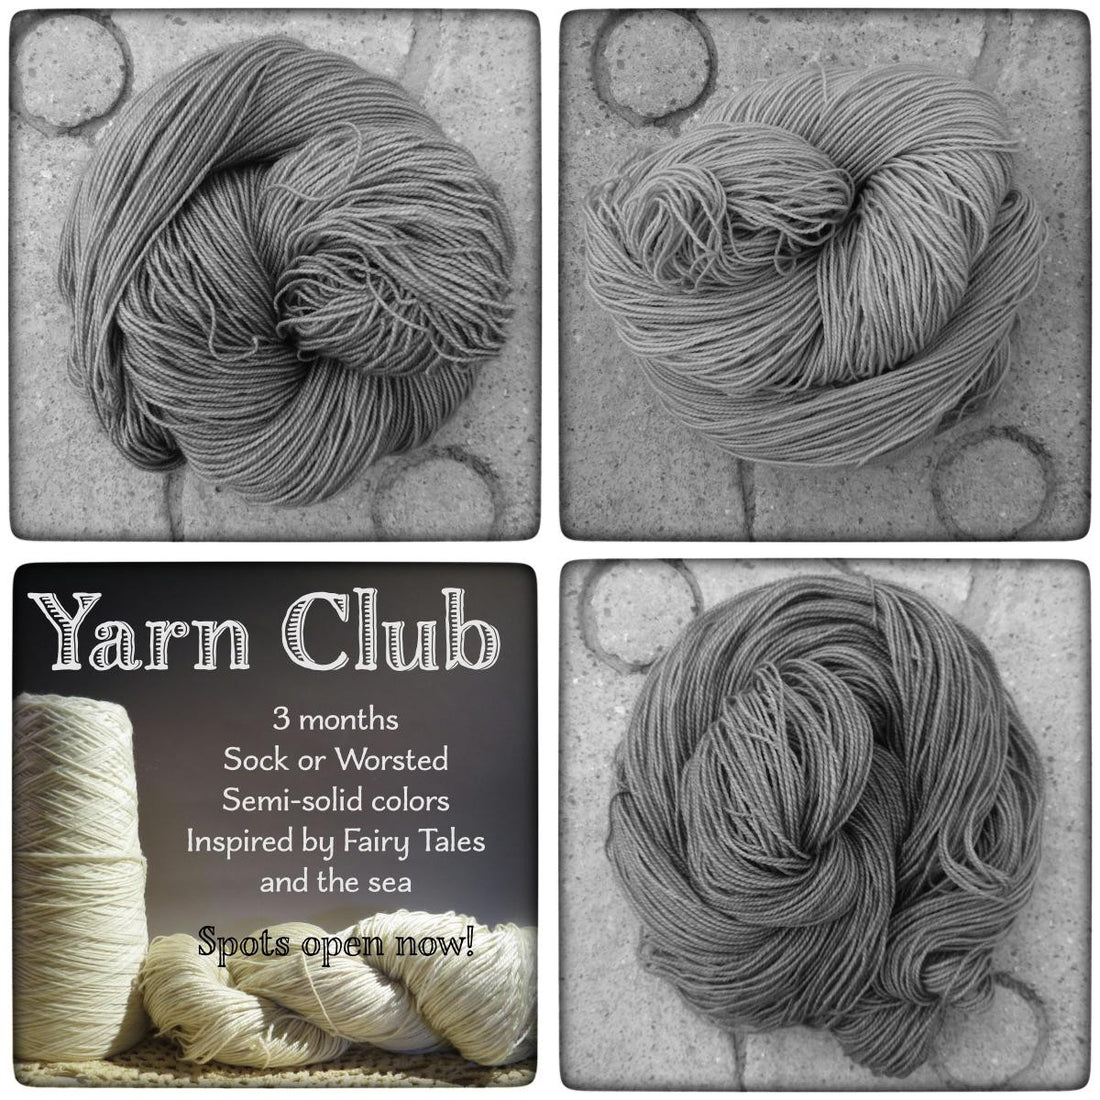 Three weeks left to get into yarn club!